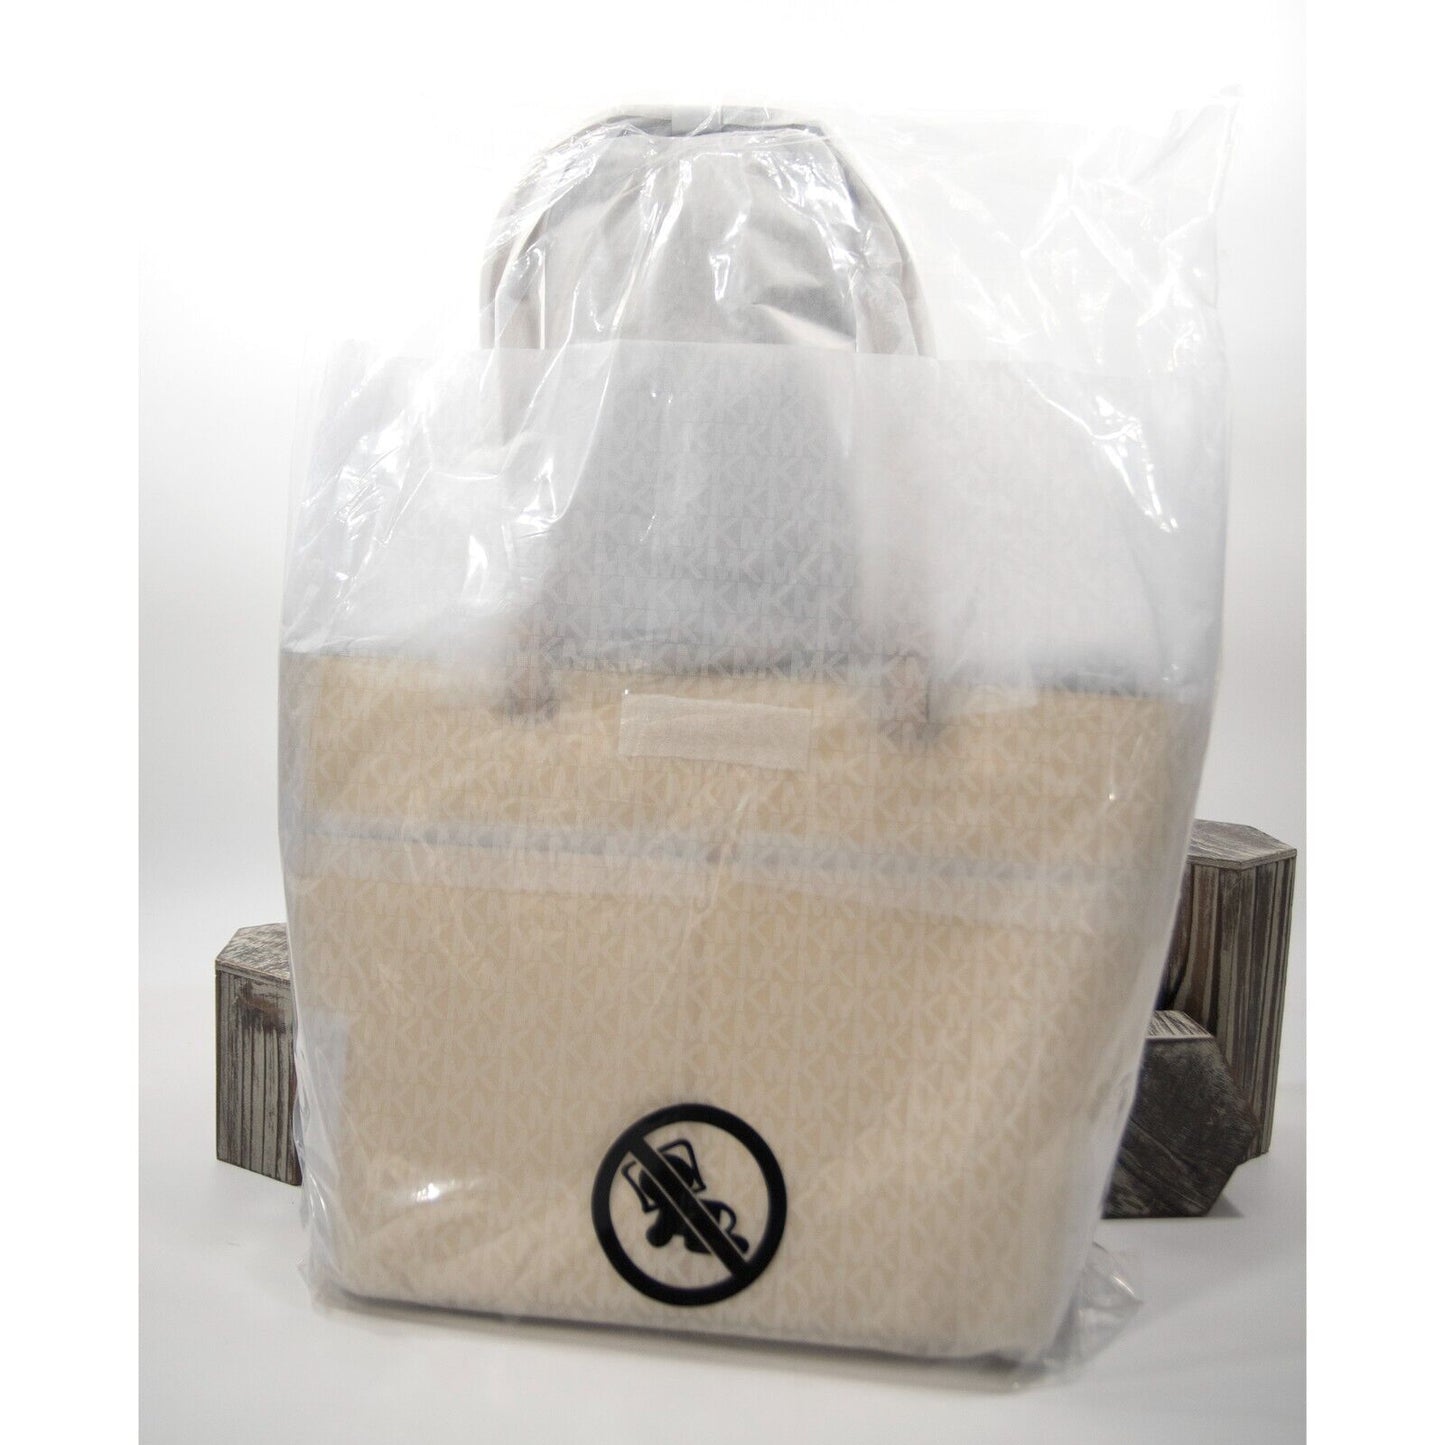 Michael Kors Bedford Buttermilk Leather Pocket Tote Bag NWT